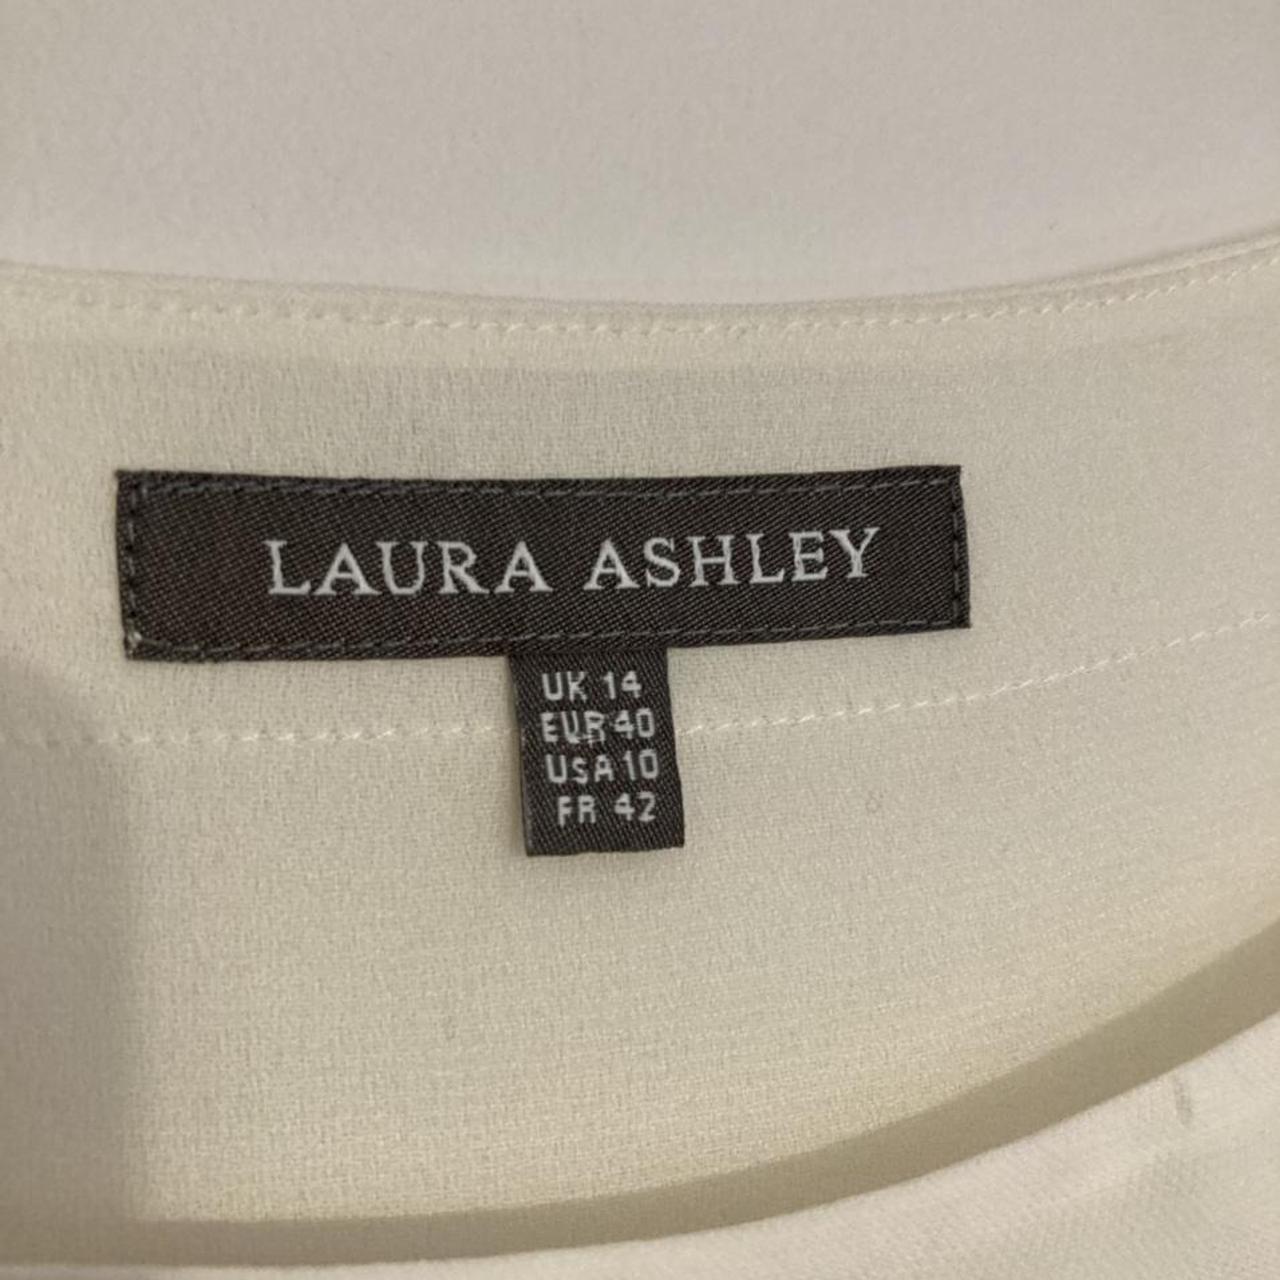 Product Image 3 - Sheer layered Laura Ashley shirt/blouse.